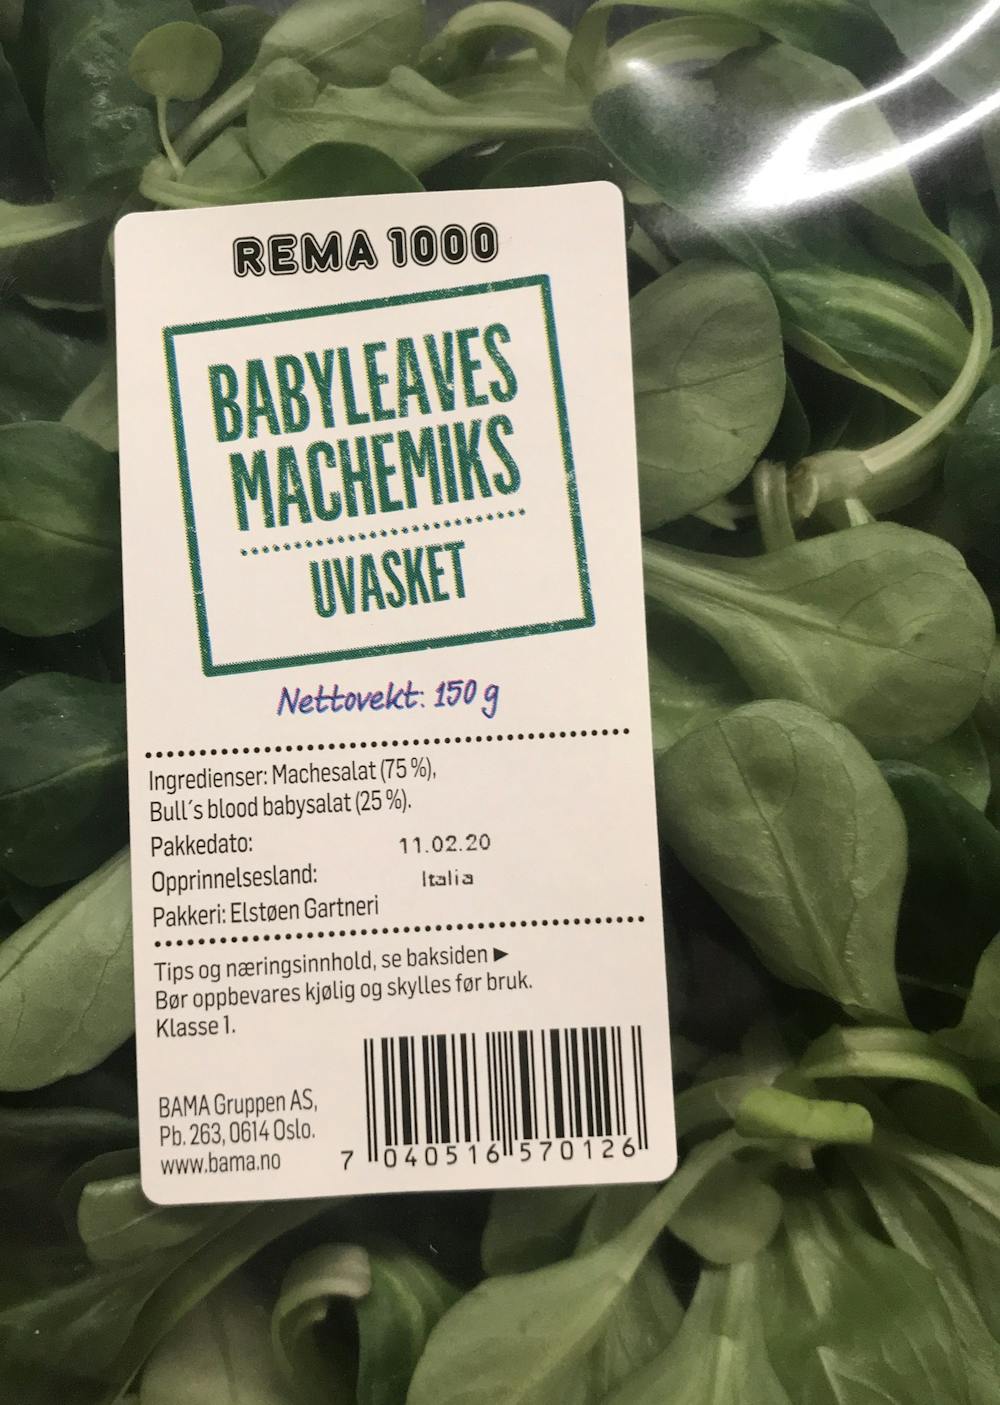 Babyleaves machemiks, Rema 1000